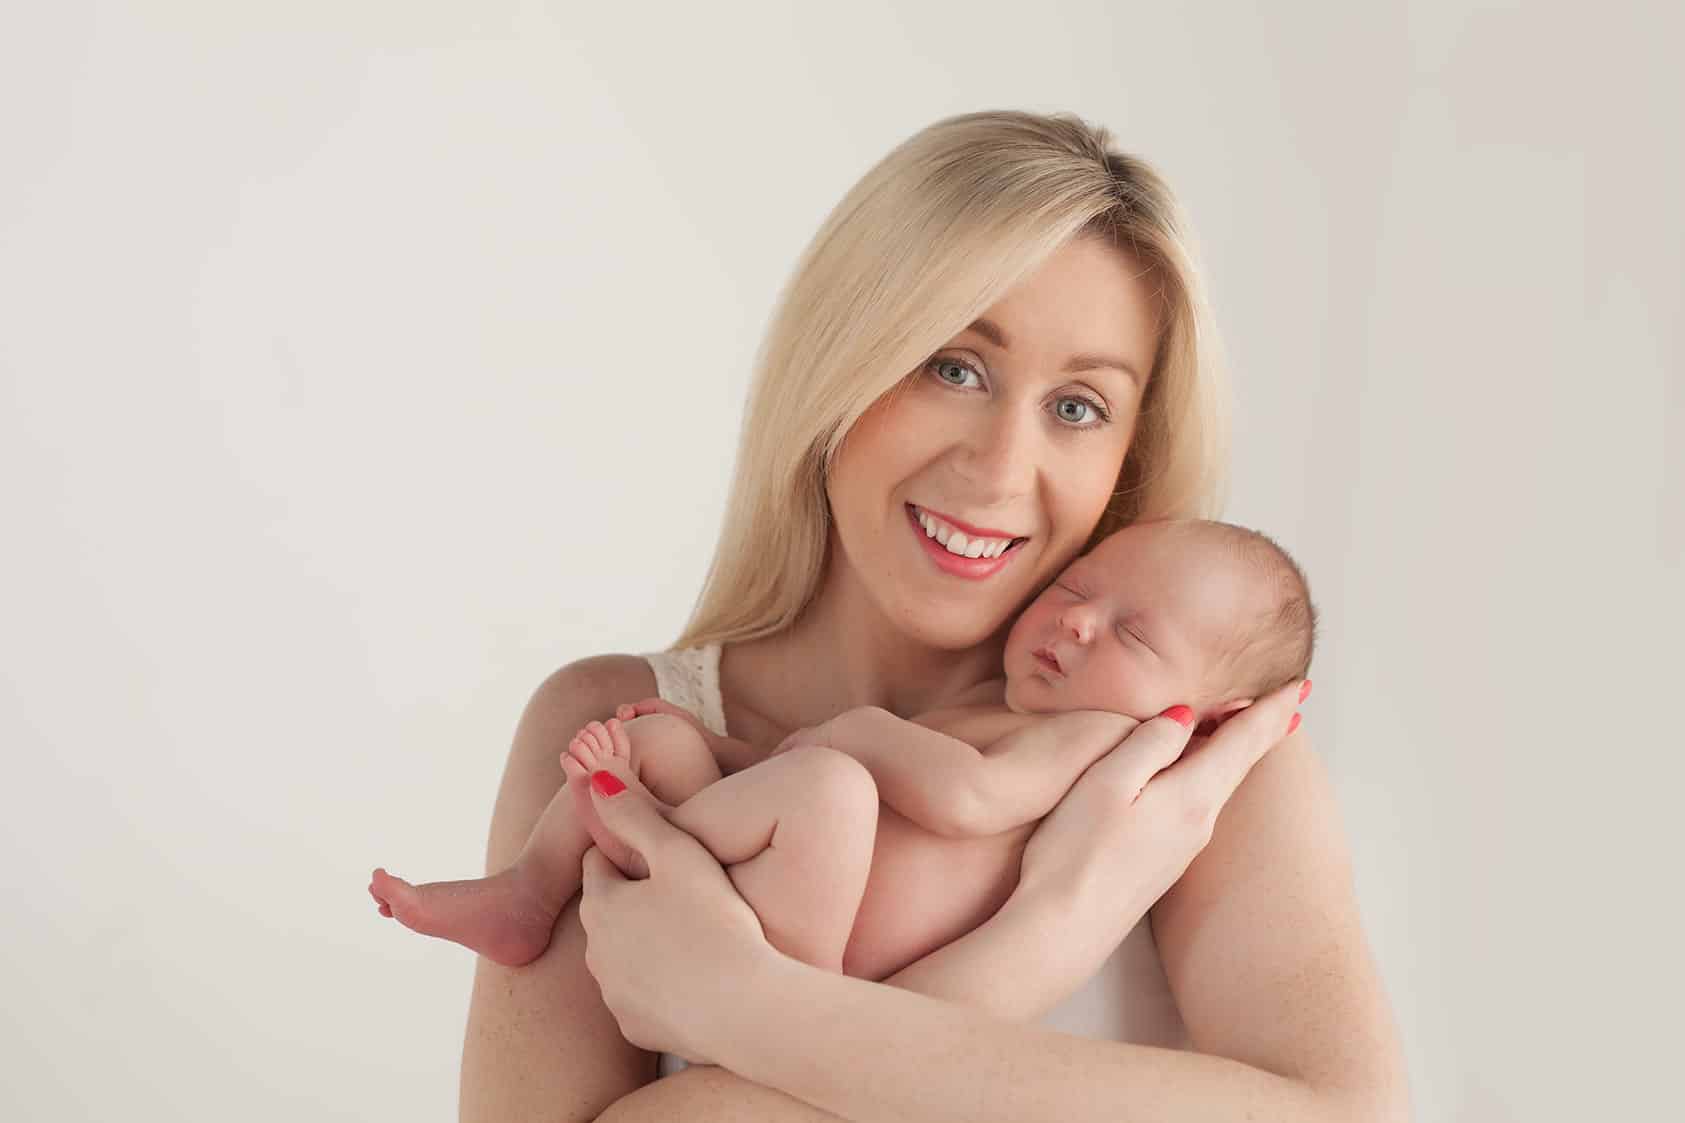 mum wearing a sleeveless top for the newborn photo shoot